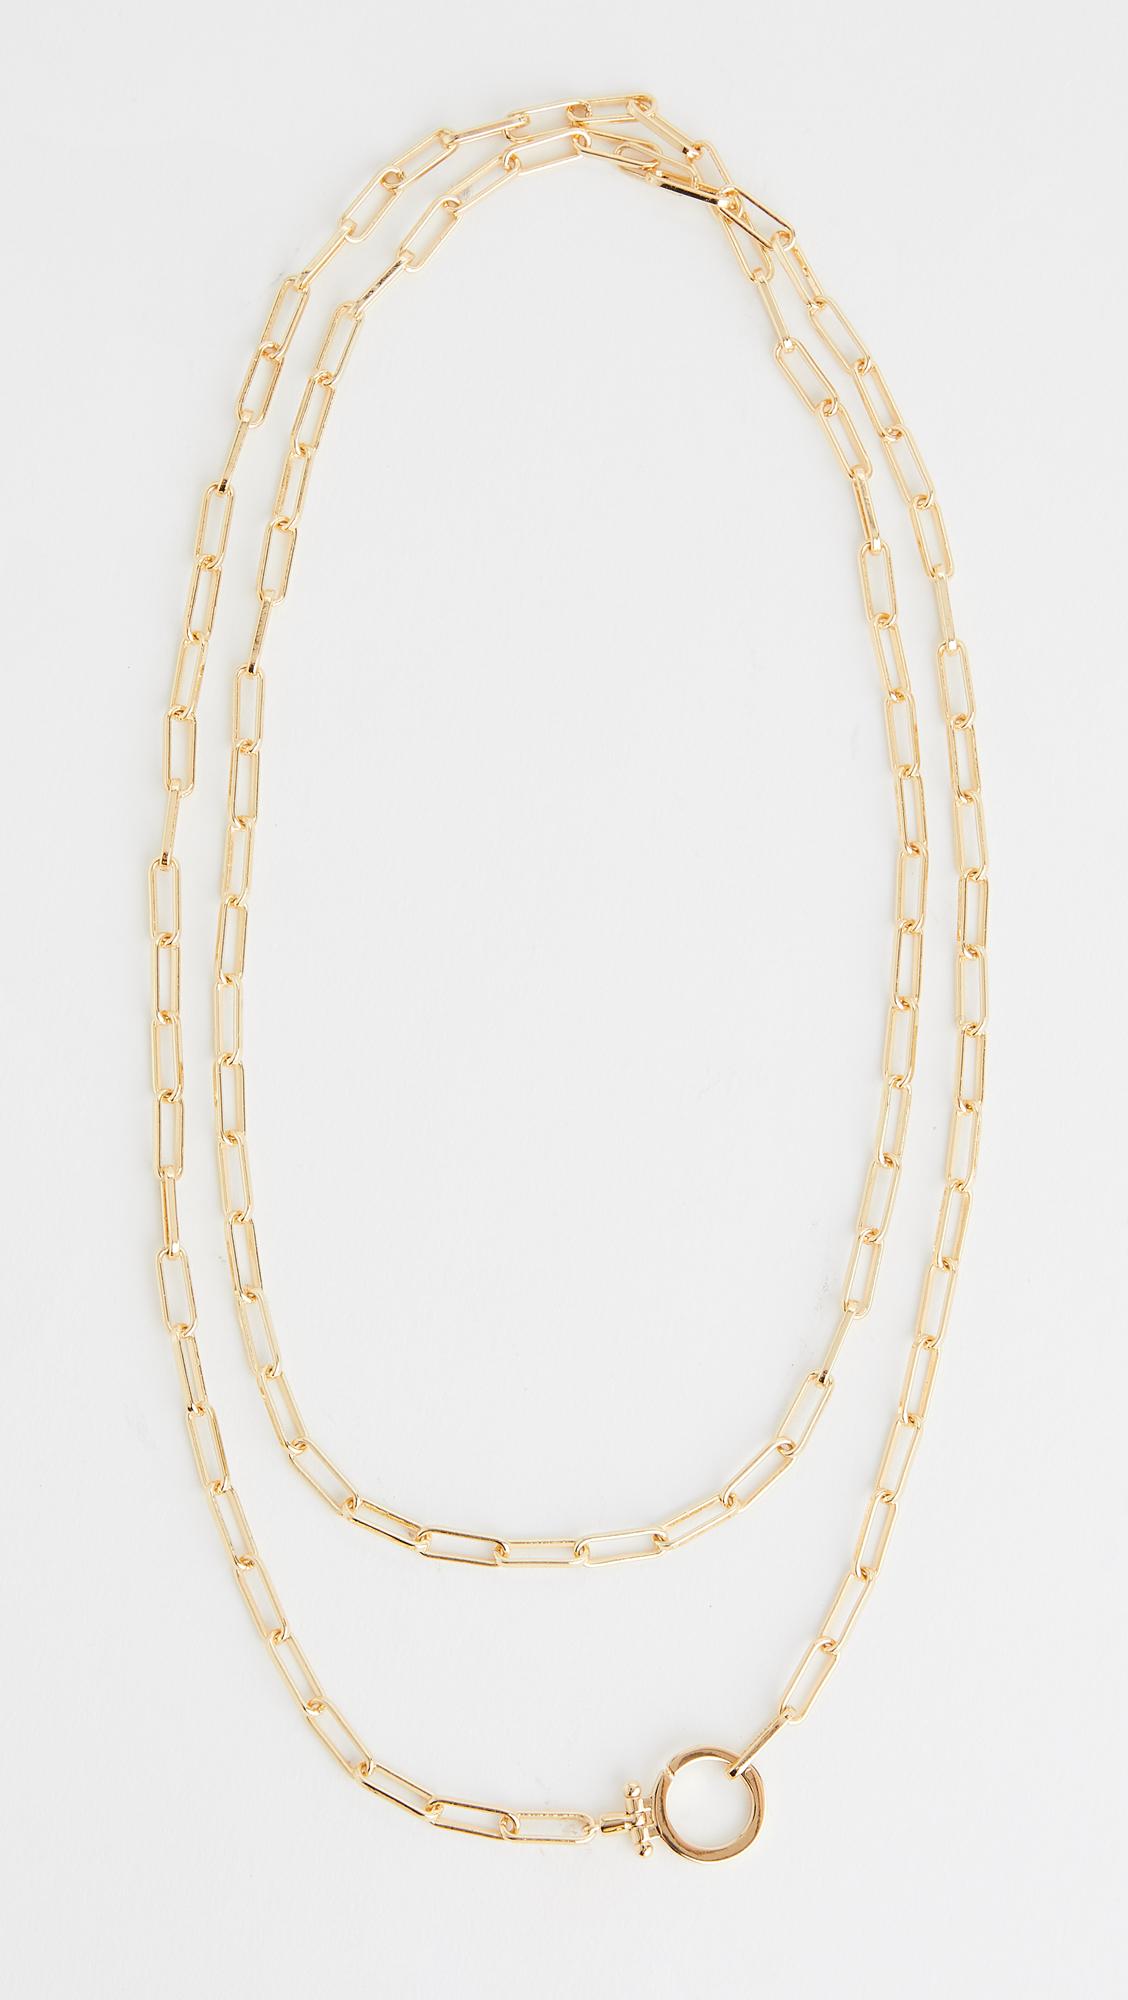 Gorjana Parker Wrap Necklace in Gold (Metallic) - Lyst